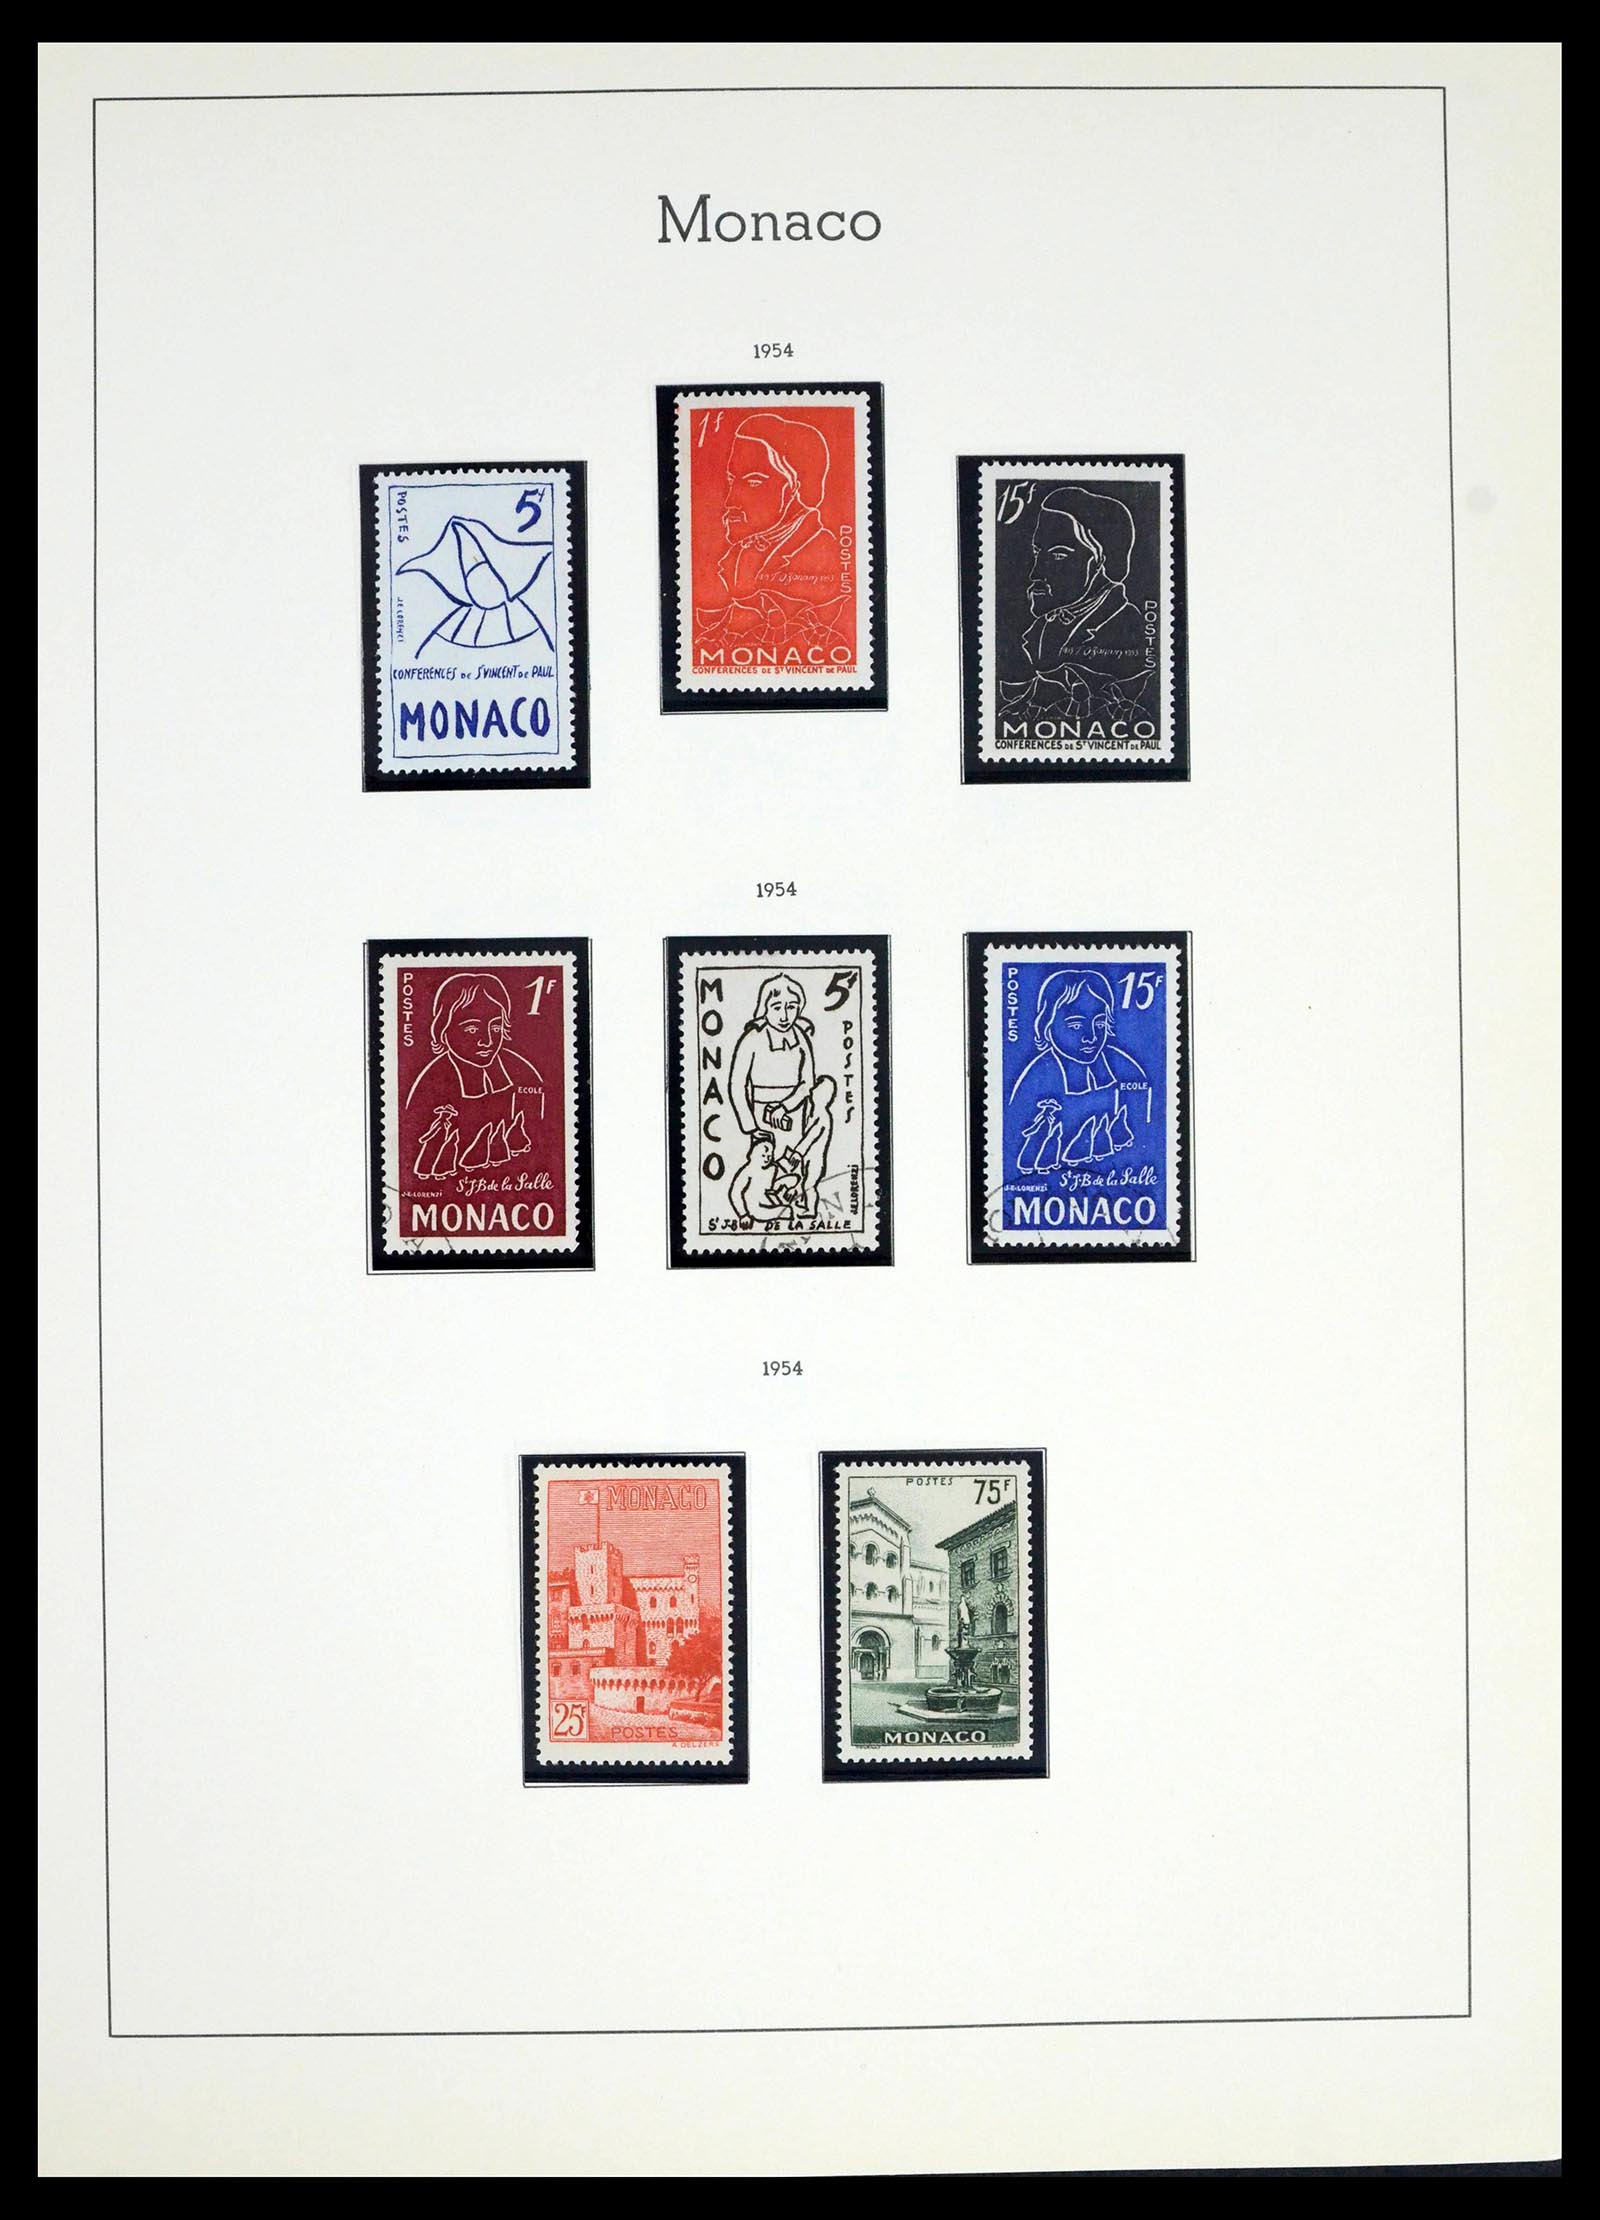 39392 0046 - Stamp collection 39392 Monaco 1885-1999.